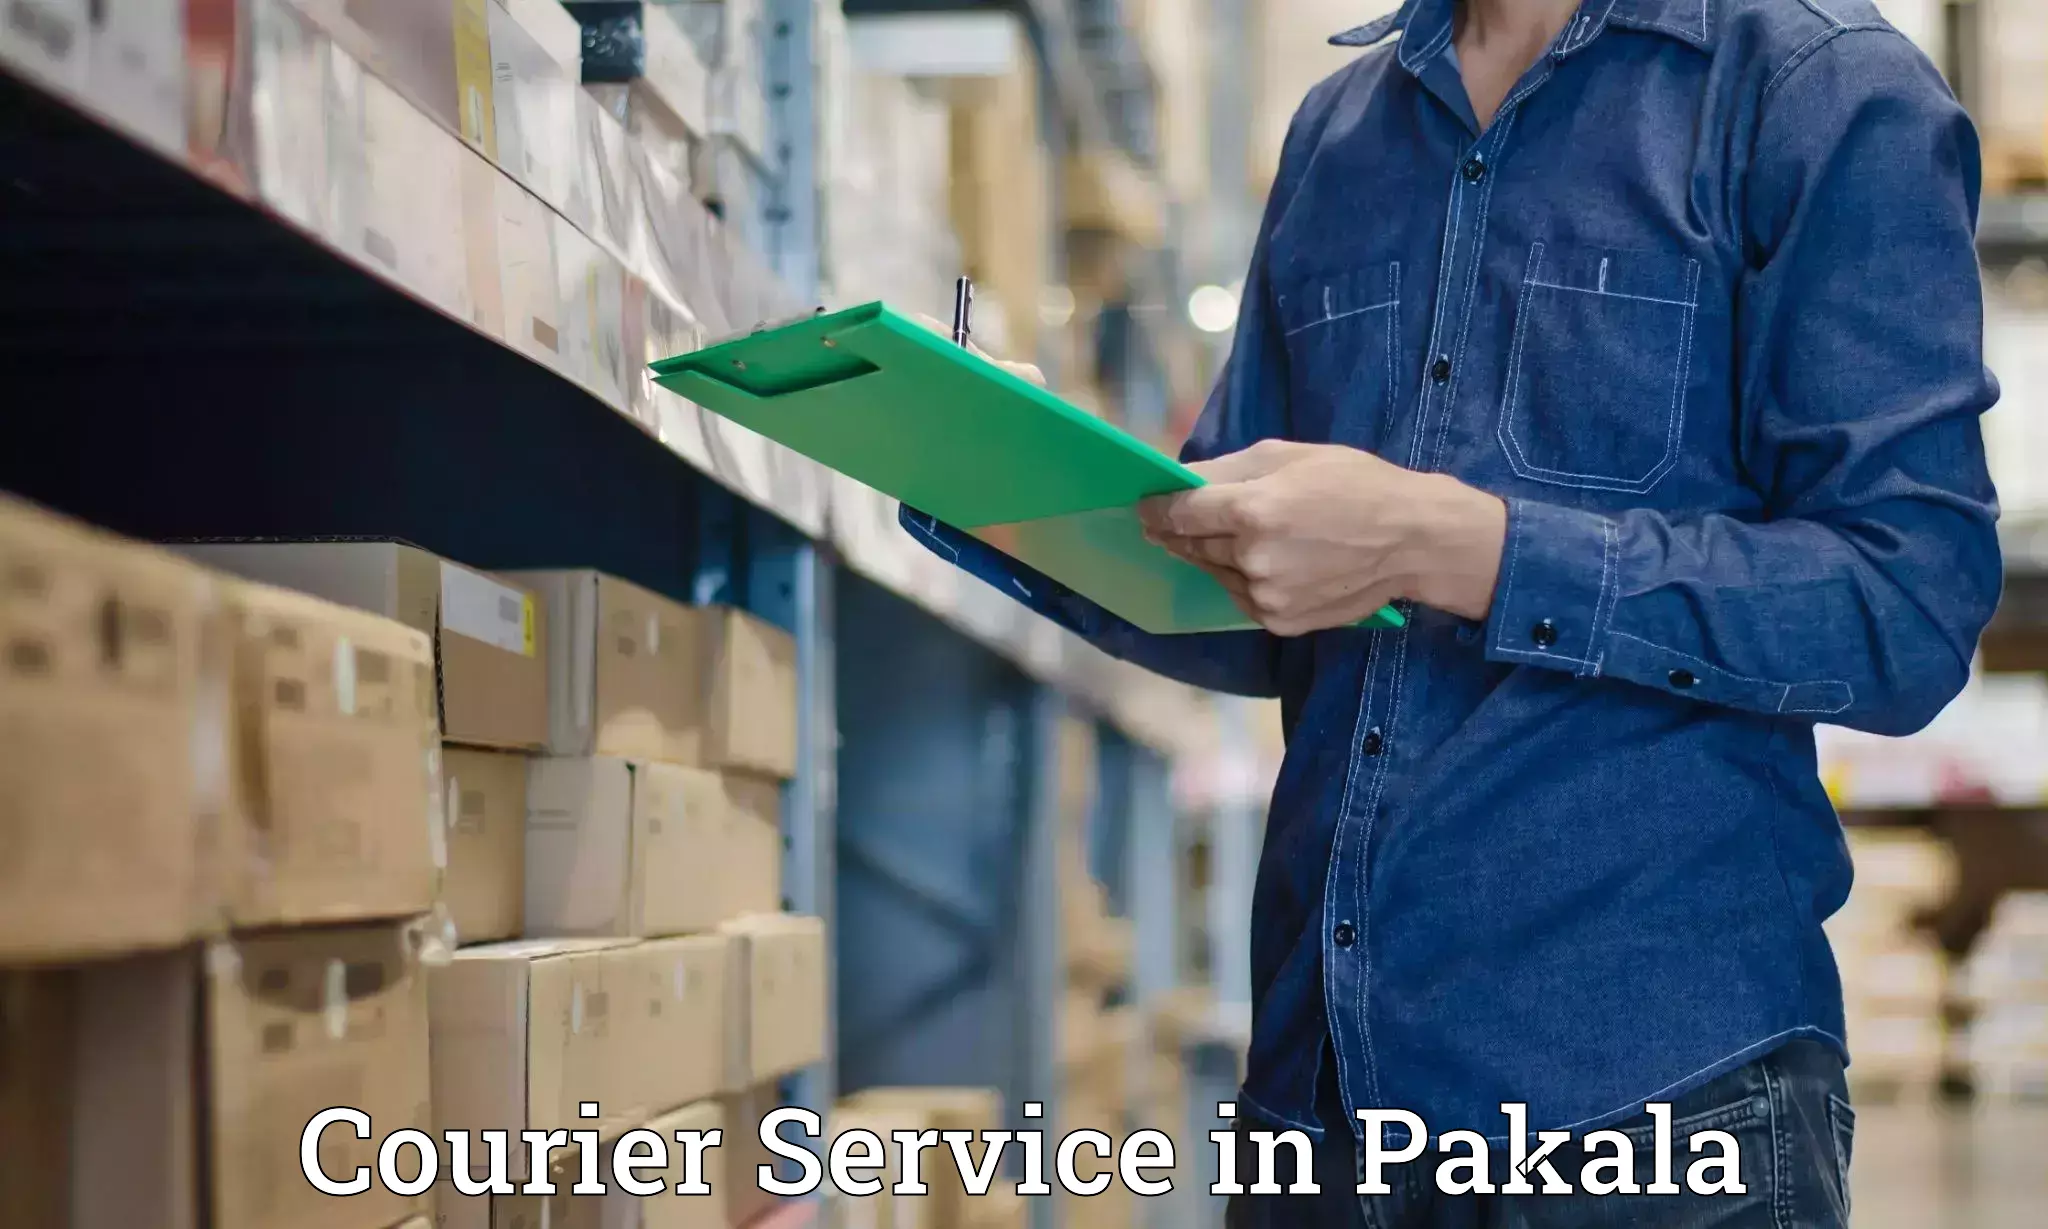 Lightweight parcel options in Pakala